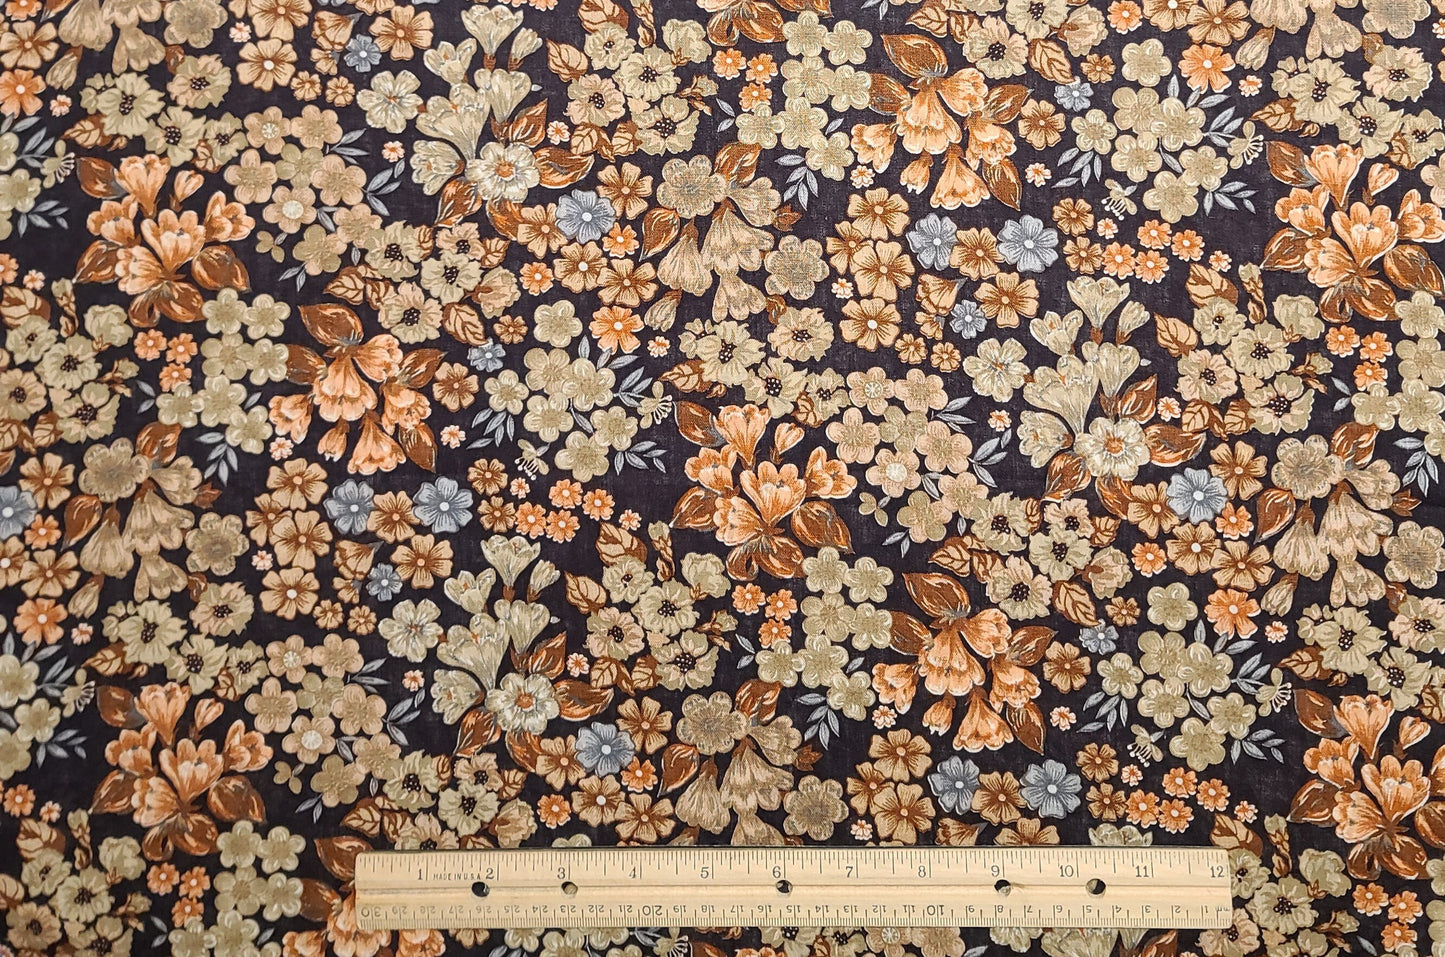 Manes Fabric Company - Vintage Blend Fabric - Dark Brown Fabric / Tan, Rust, Light Blue Flower Print